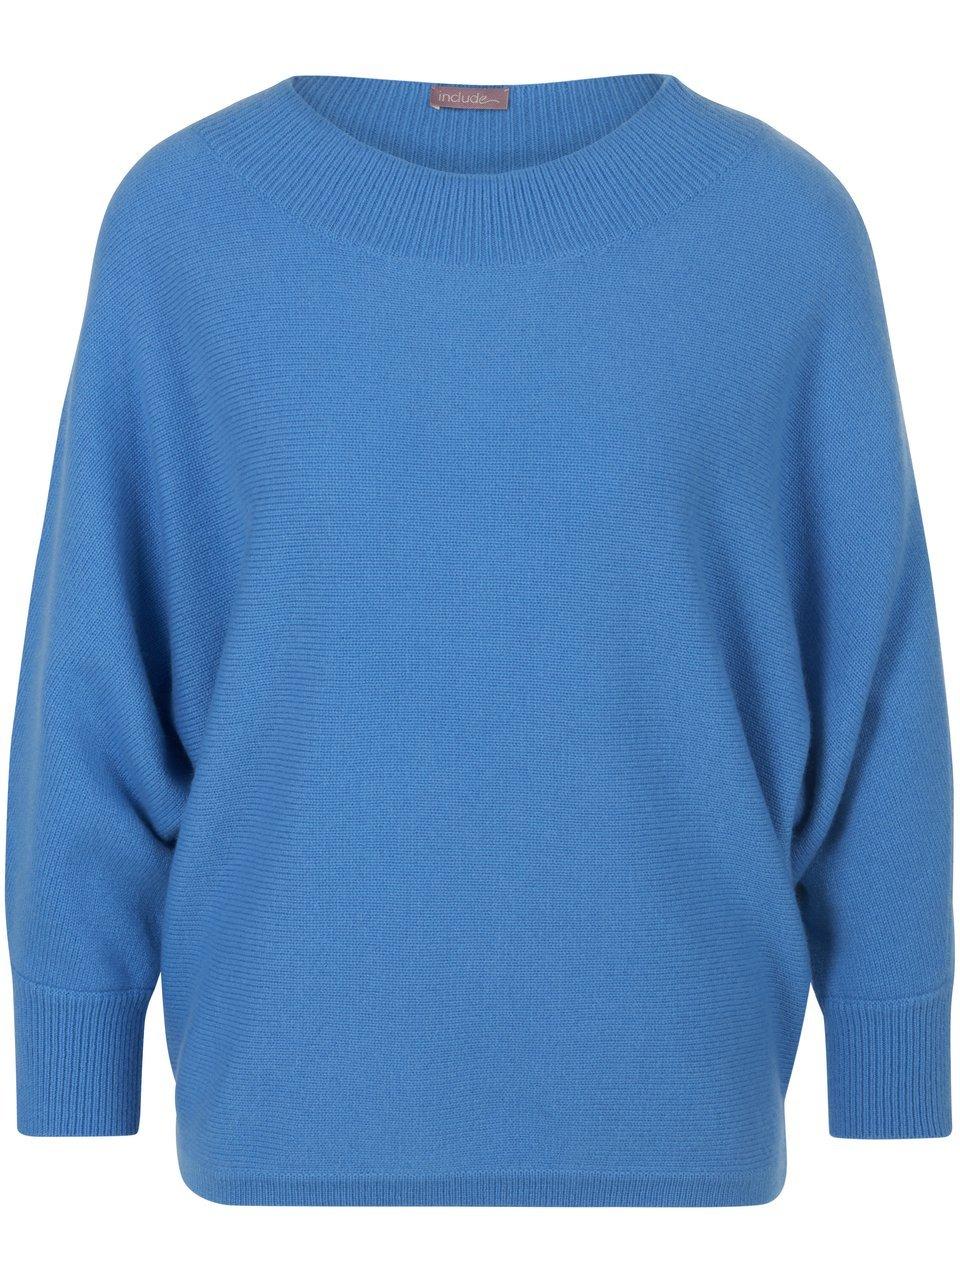 Rundhals-Pullover aus 100% Premium-Kaschmir include blau im Sale-Include 1